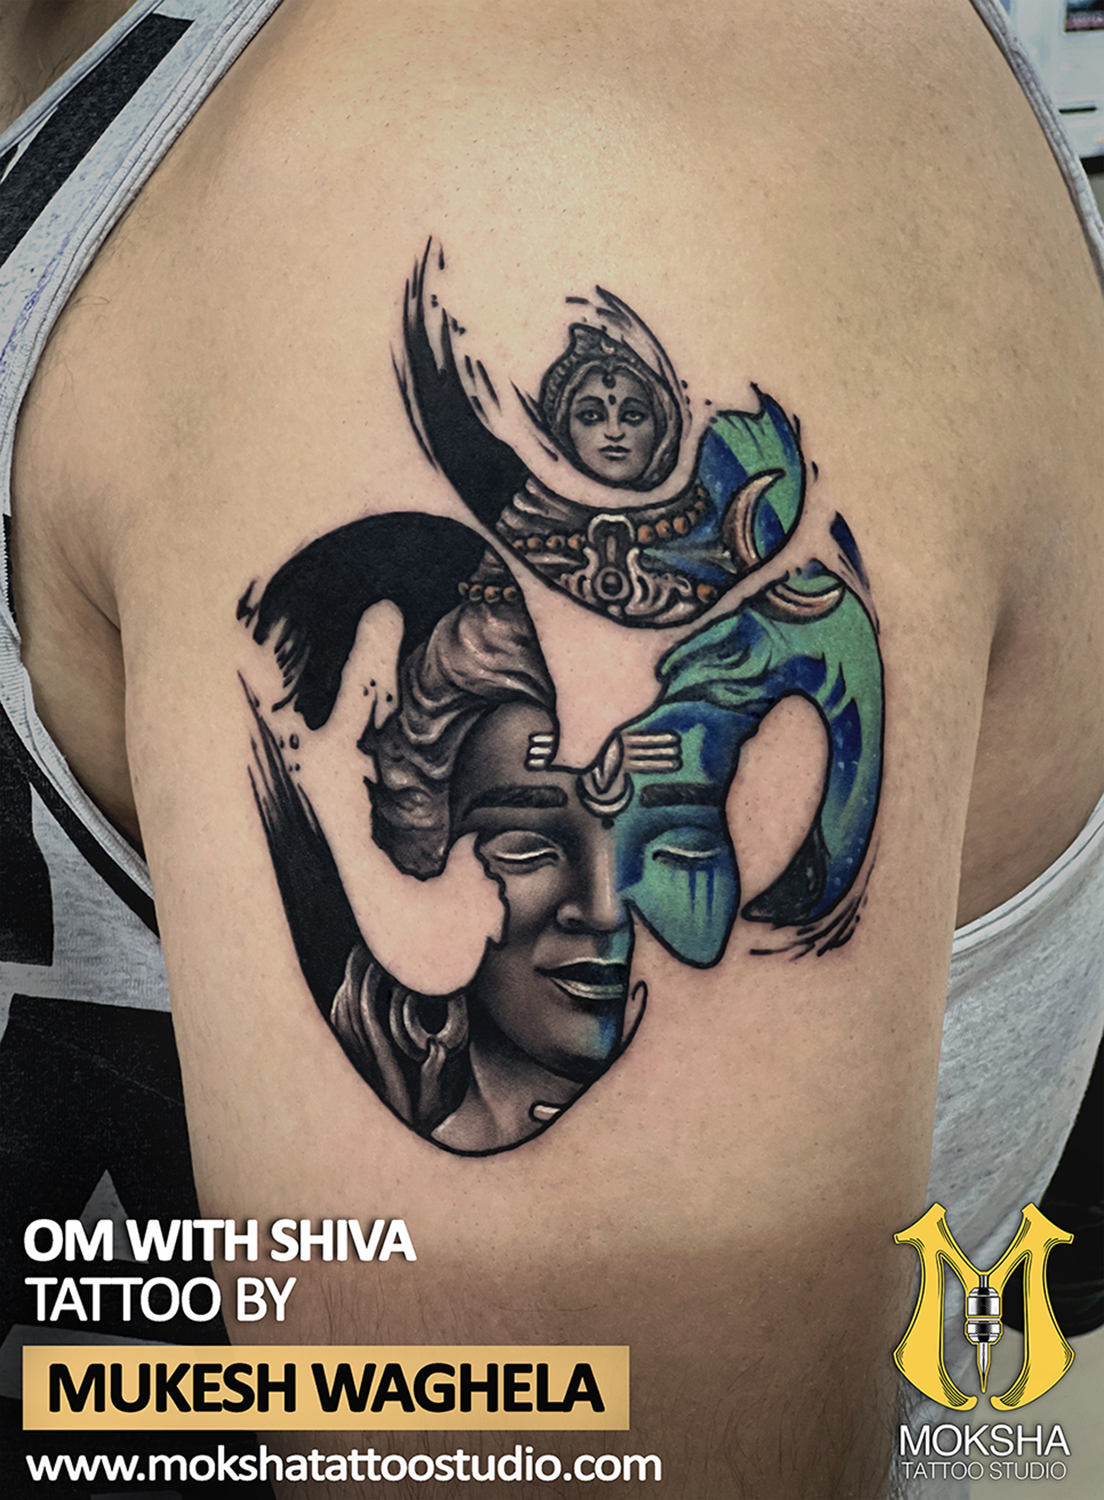 You are currently viewing Shiva Tattoo By Mukesh Waghela The Best Tattoo Artist In Goa At Moksha Tattoo Studio Goa India.